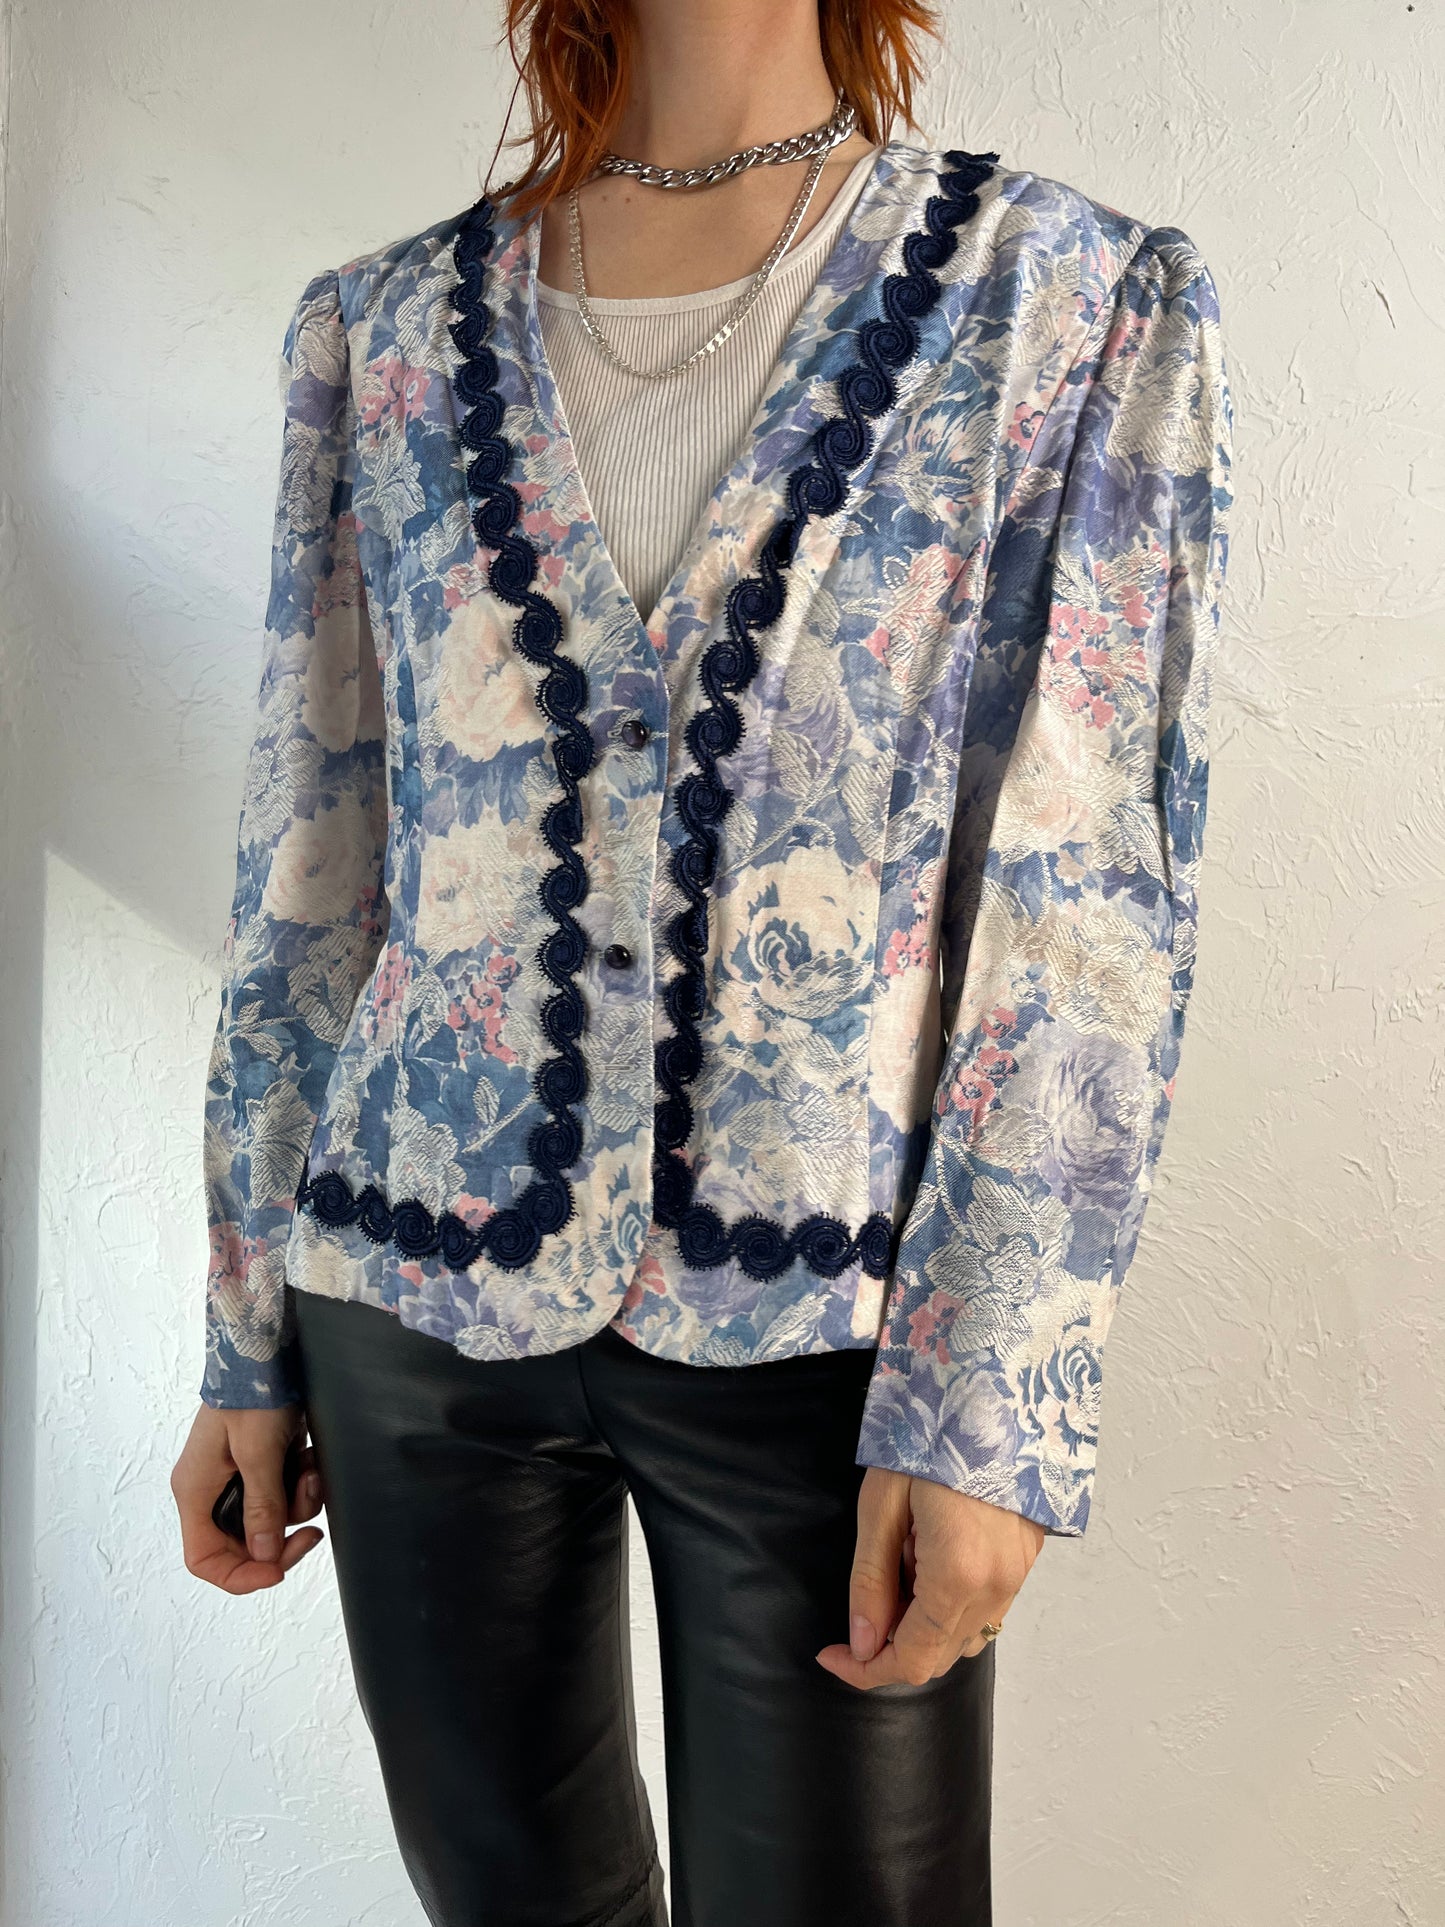 80s 'Silhouettes' Pastel Floral Print Blazer Jacket / Medium